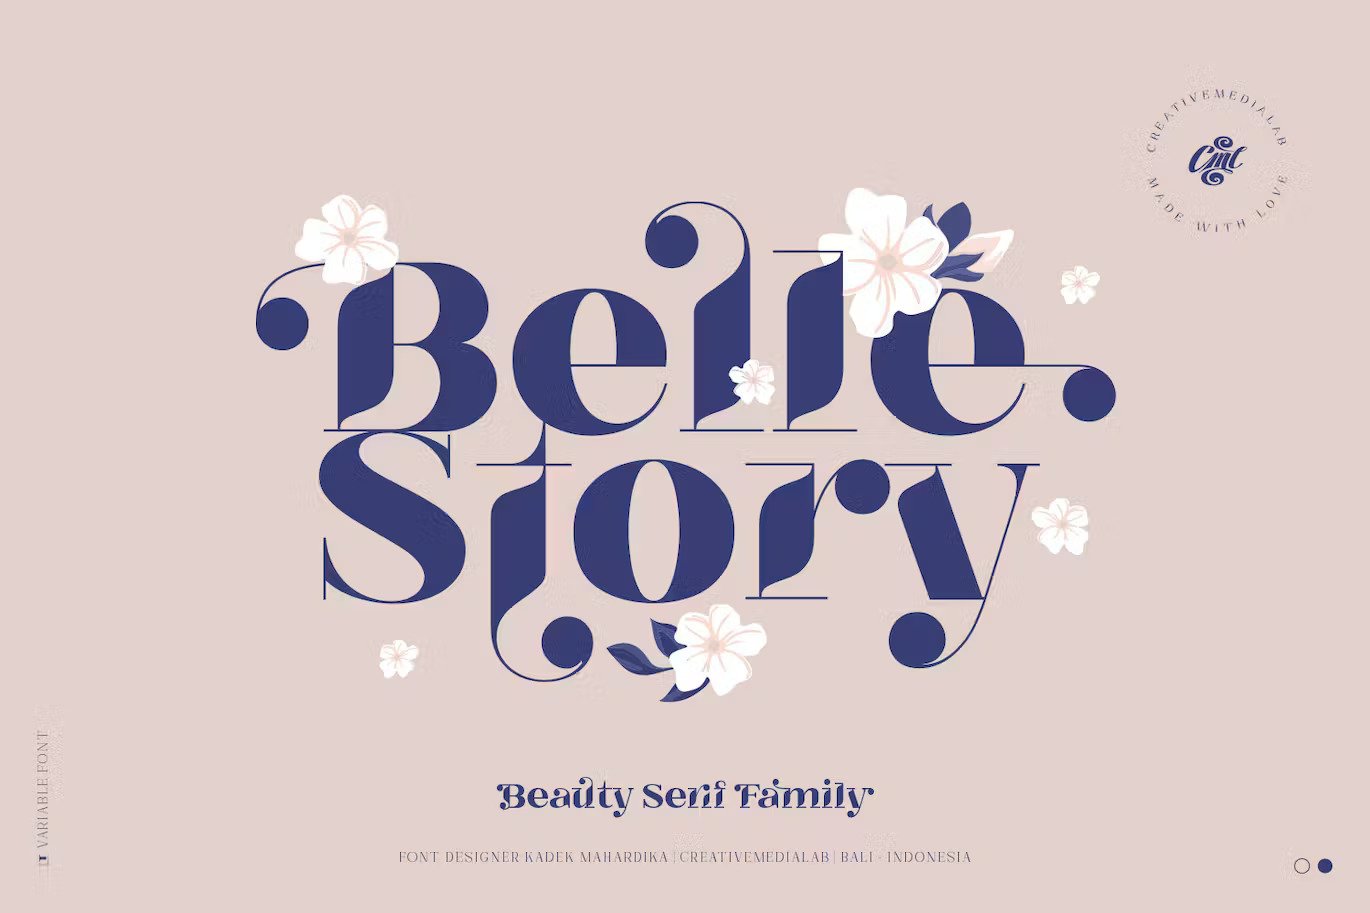 A beauty serif font family